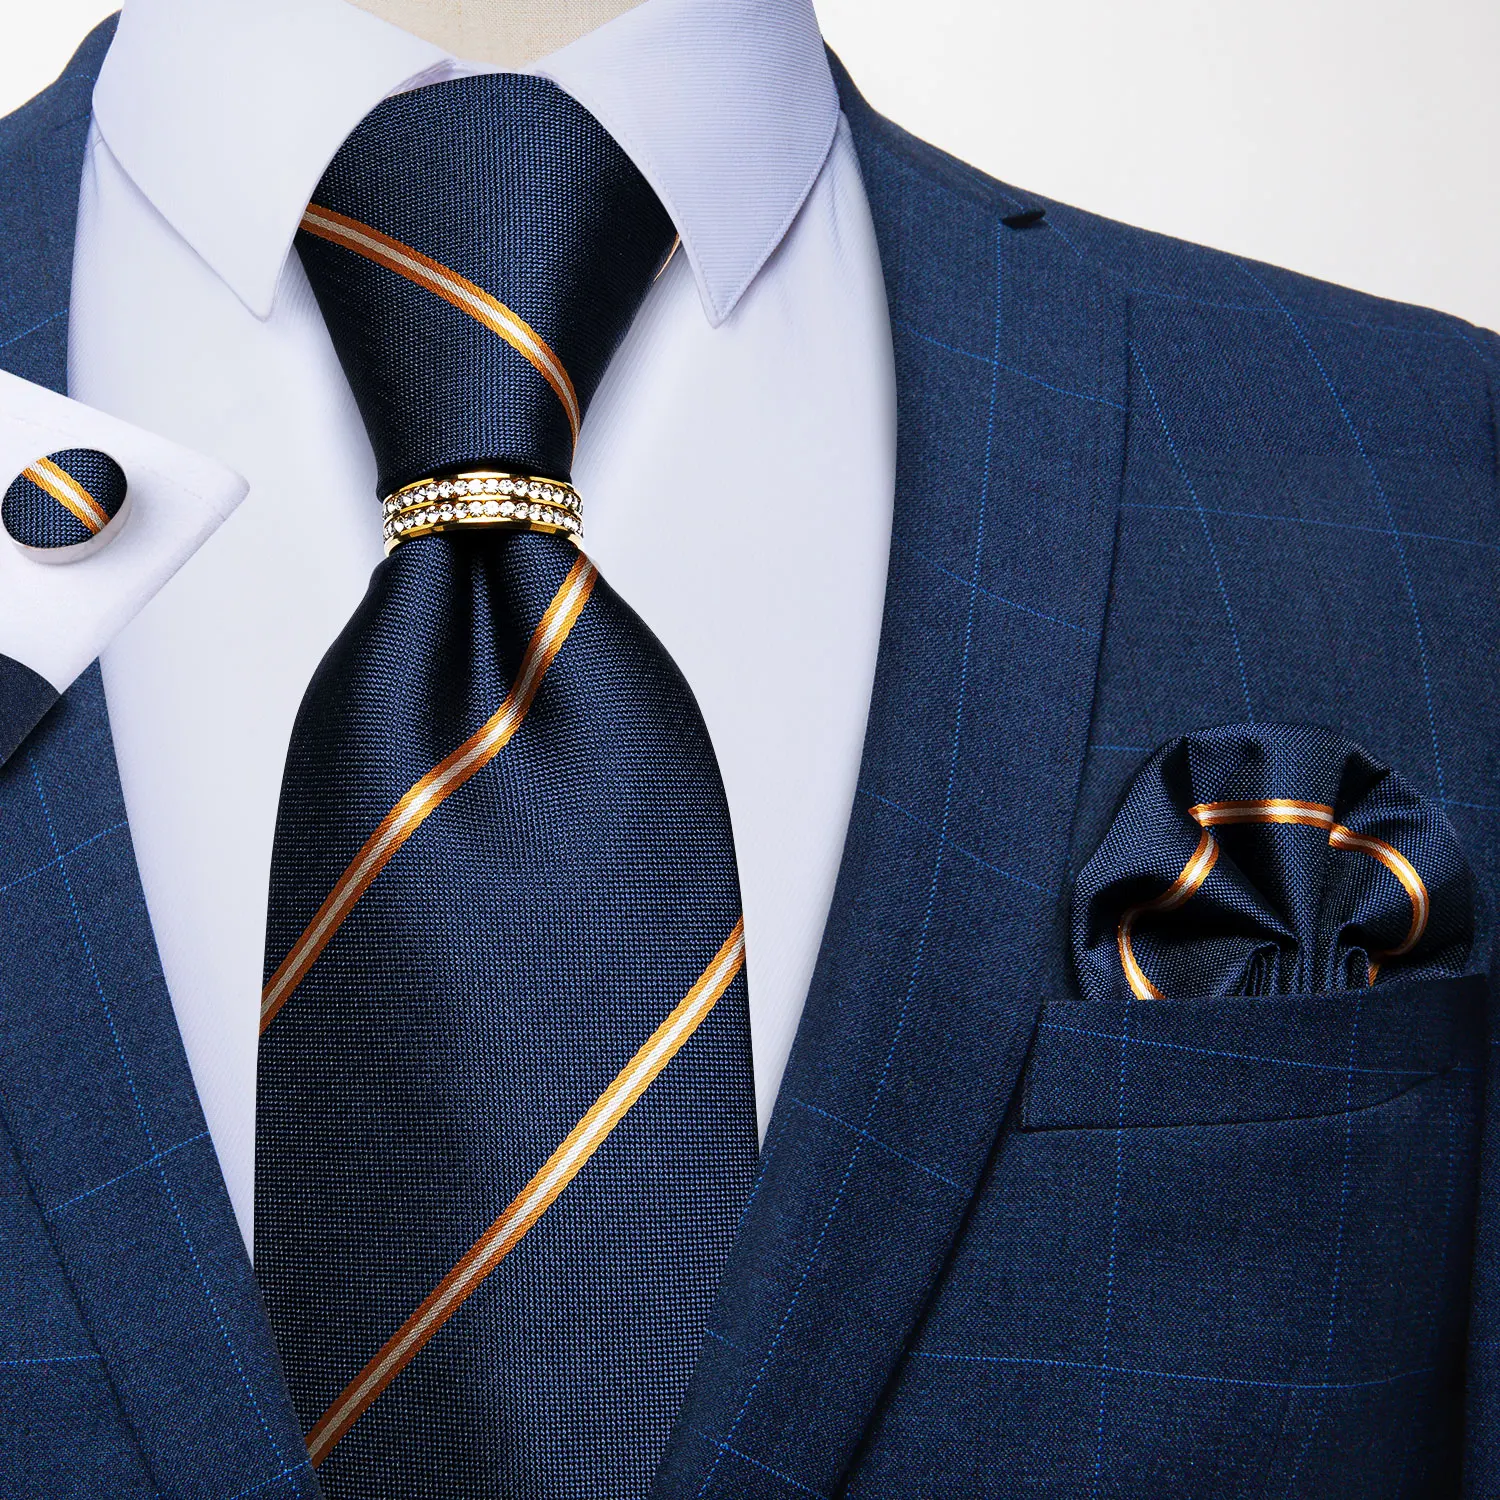 N/A Cravatta da Uomo Attillata Classica Blu Jacquard Intrecciata Extra Lunga Cravatta fazzoletti Gemelli Set Festa Nuziale Formale per Uomo 